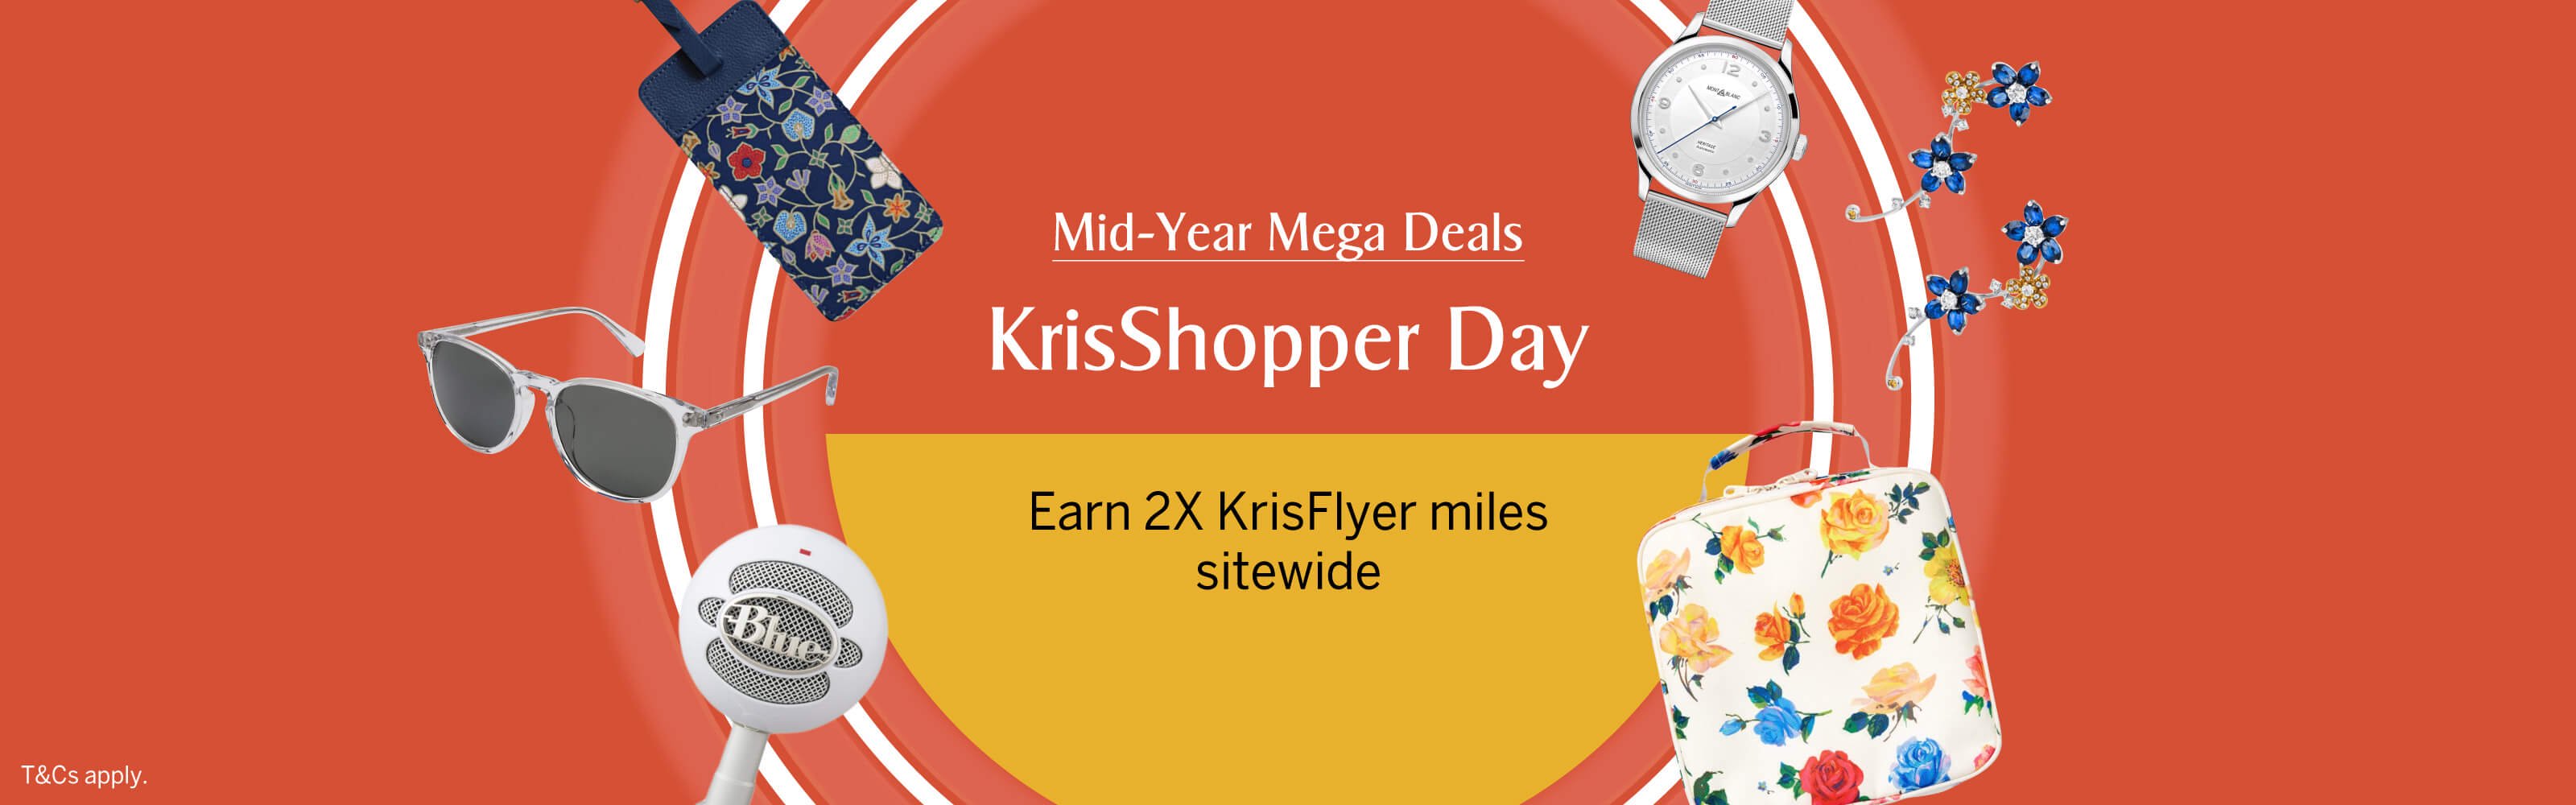 KrisShopper Day - 2X KrisFlyer miles